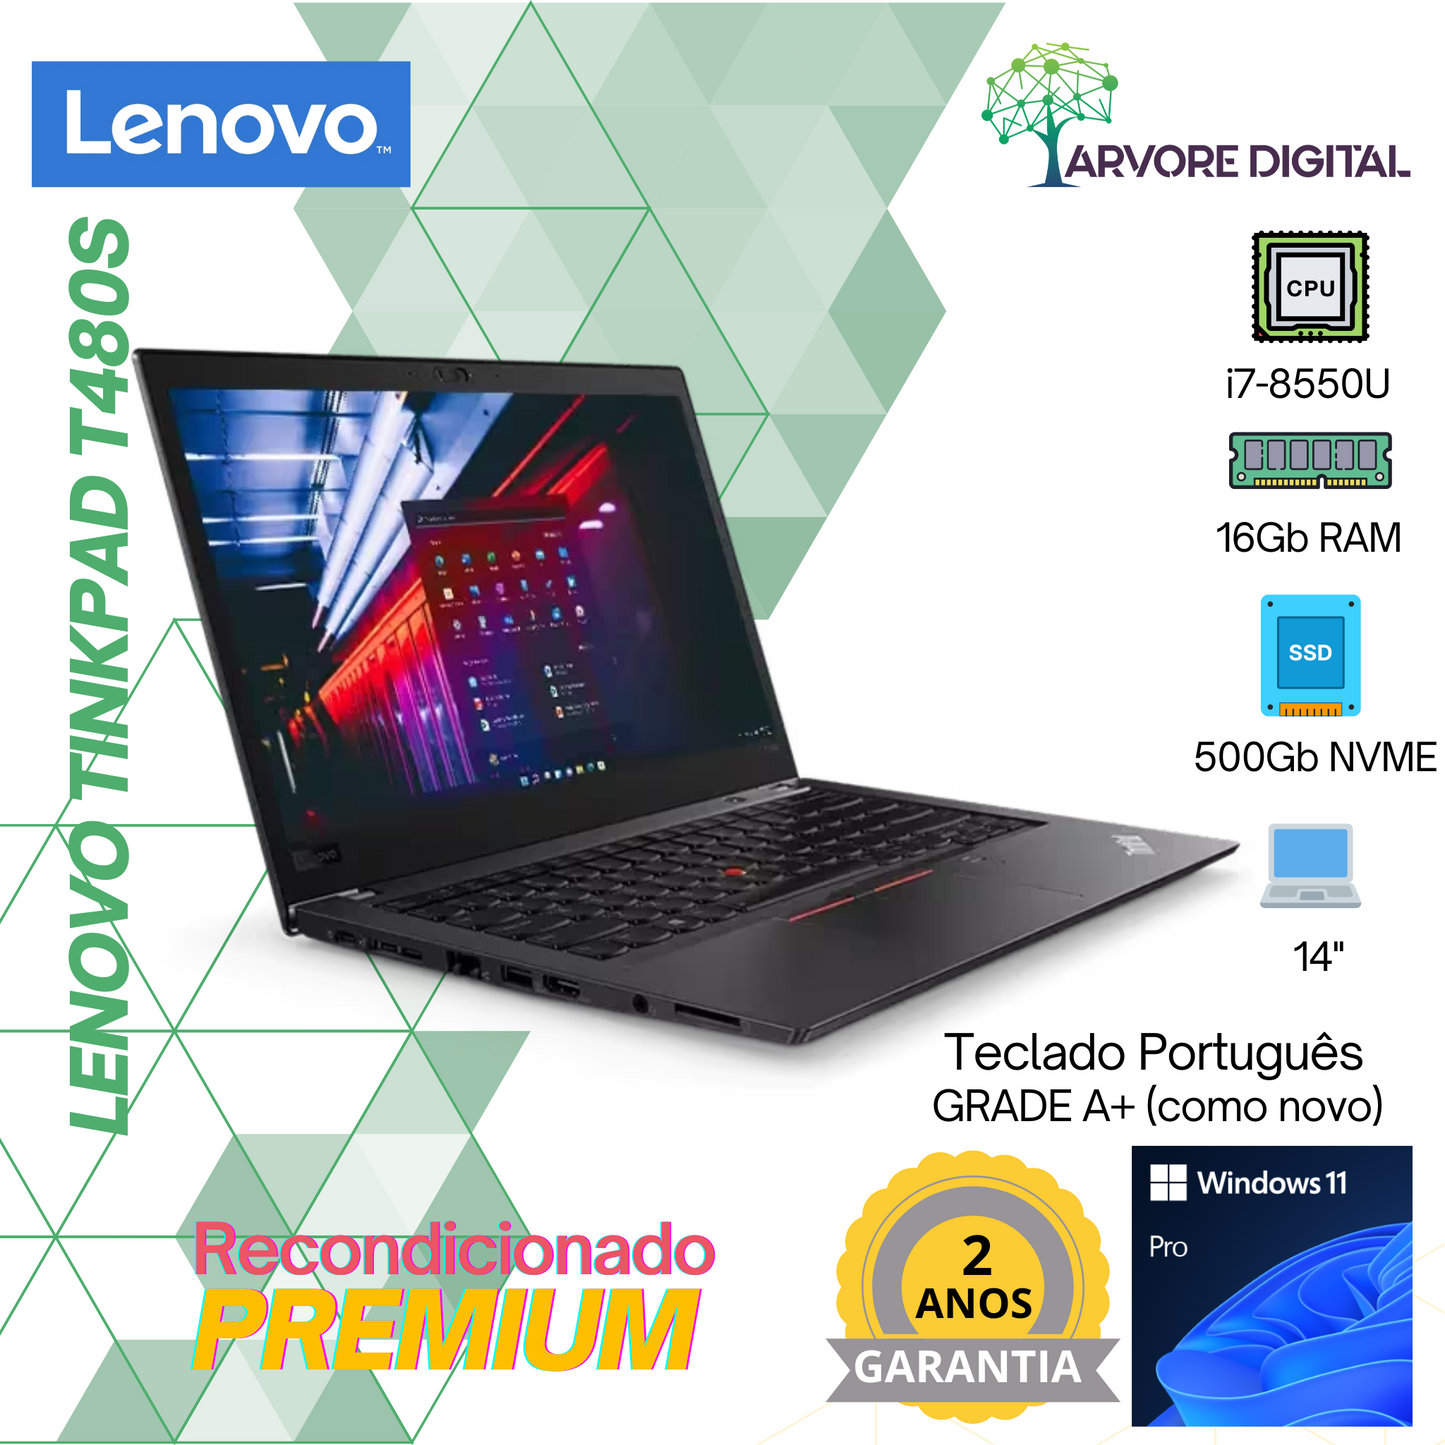 Lenovo ThinkPad T480s | i7-8550U | 16Gb | 500Gb NVME | 14'' | Teclado PT | W11 Pro | GRADE A+